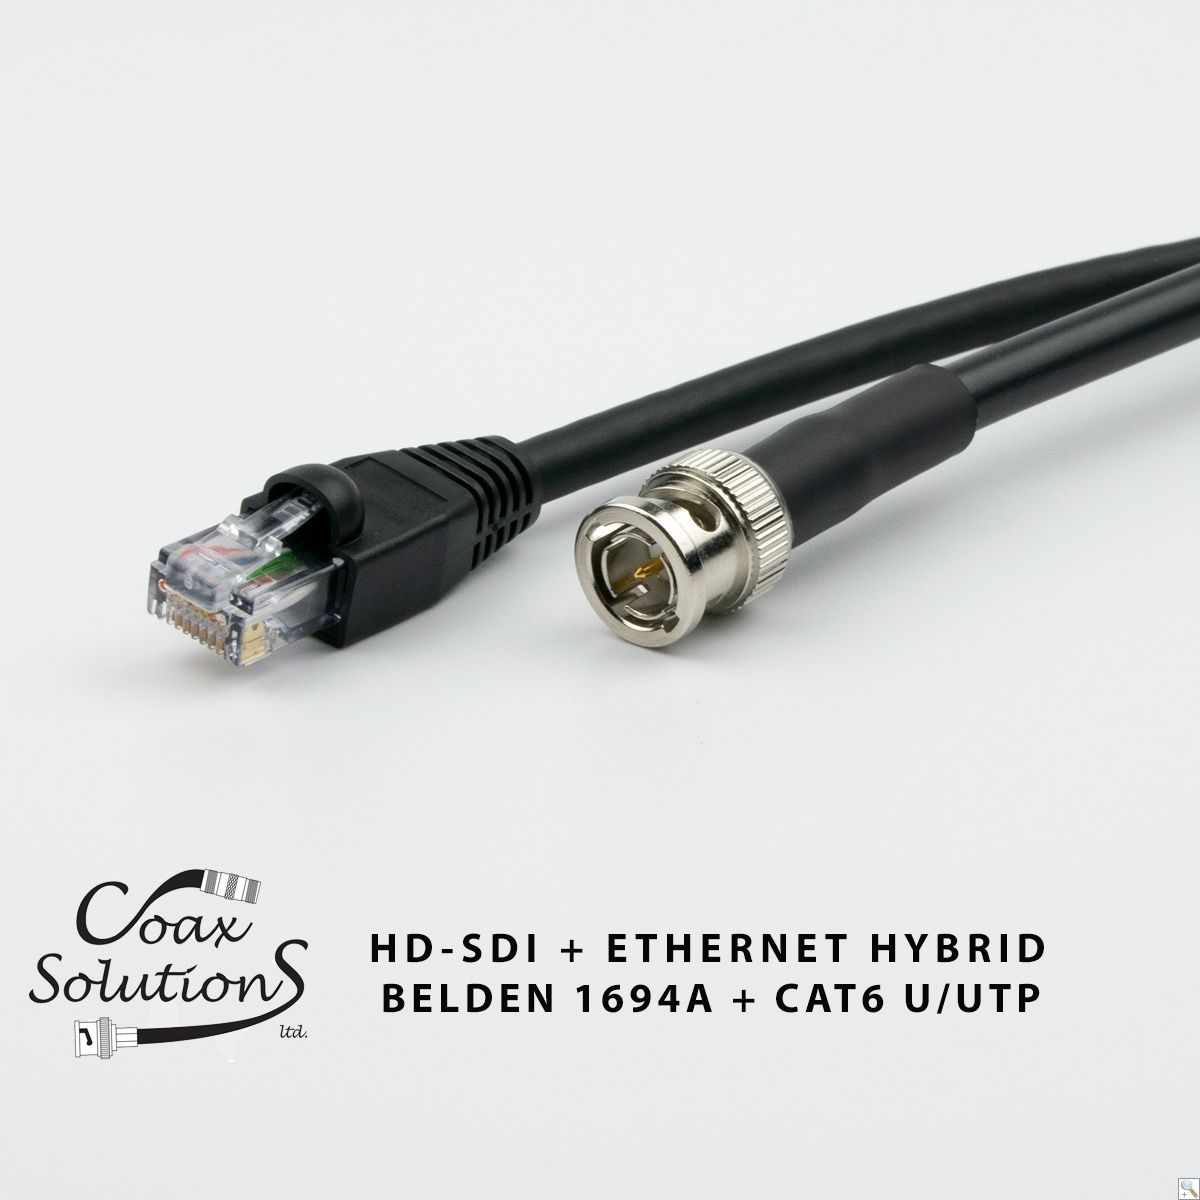 Belden 1694A + CAT6 Hybrid HD-SDI Patch Cable